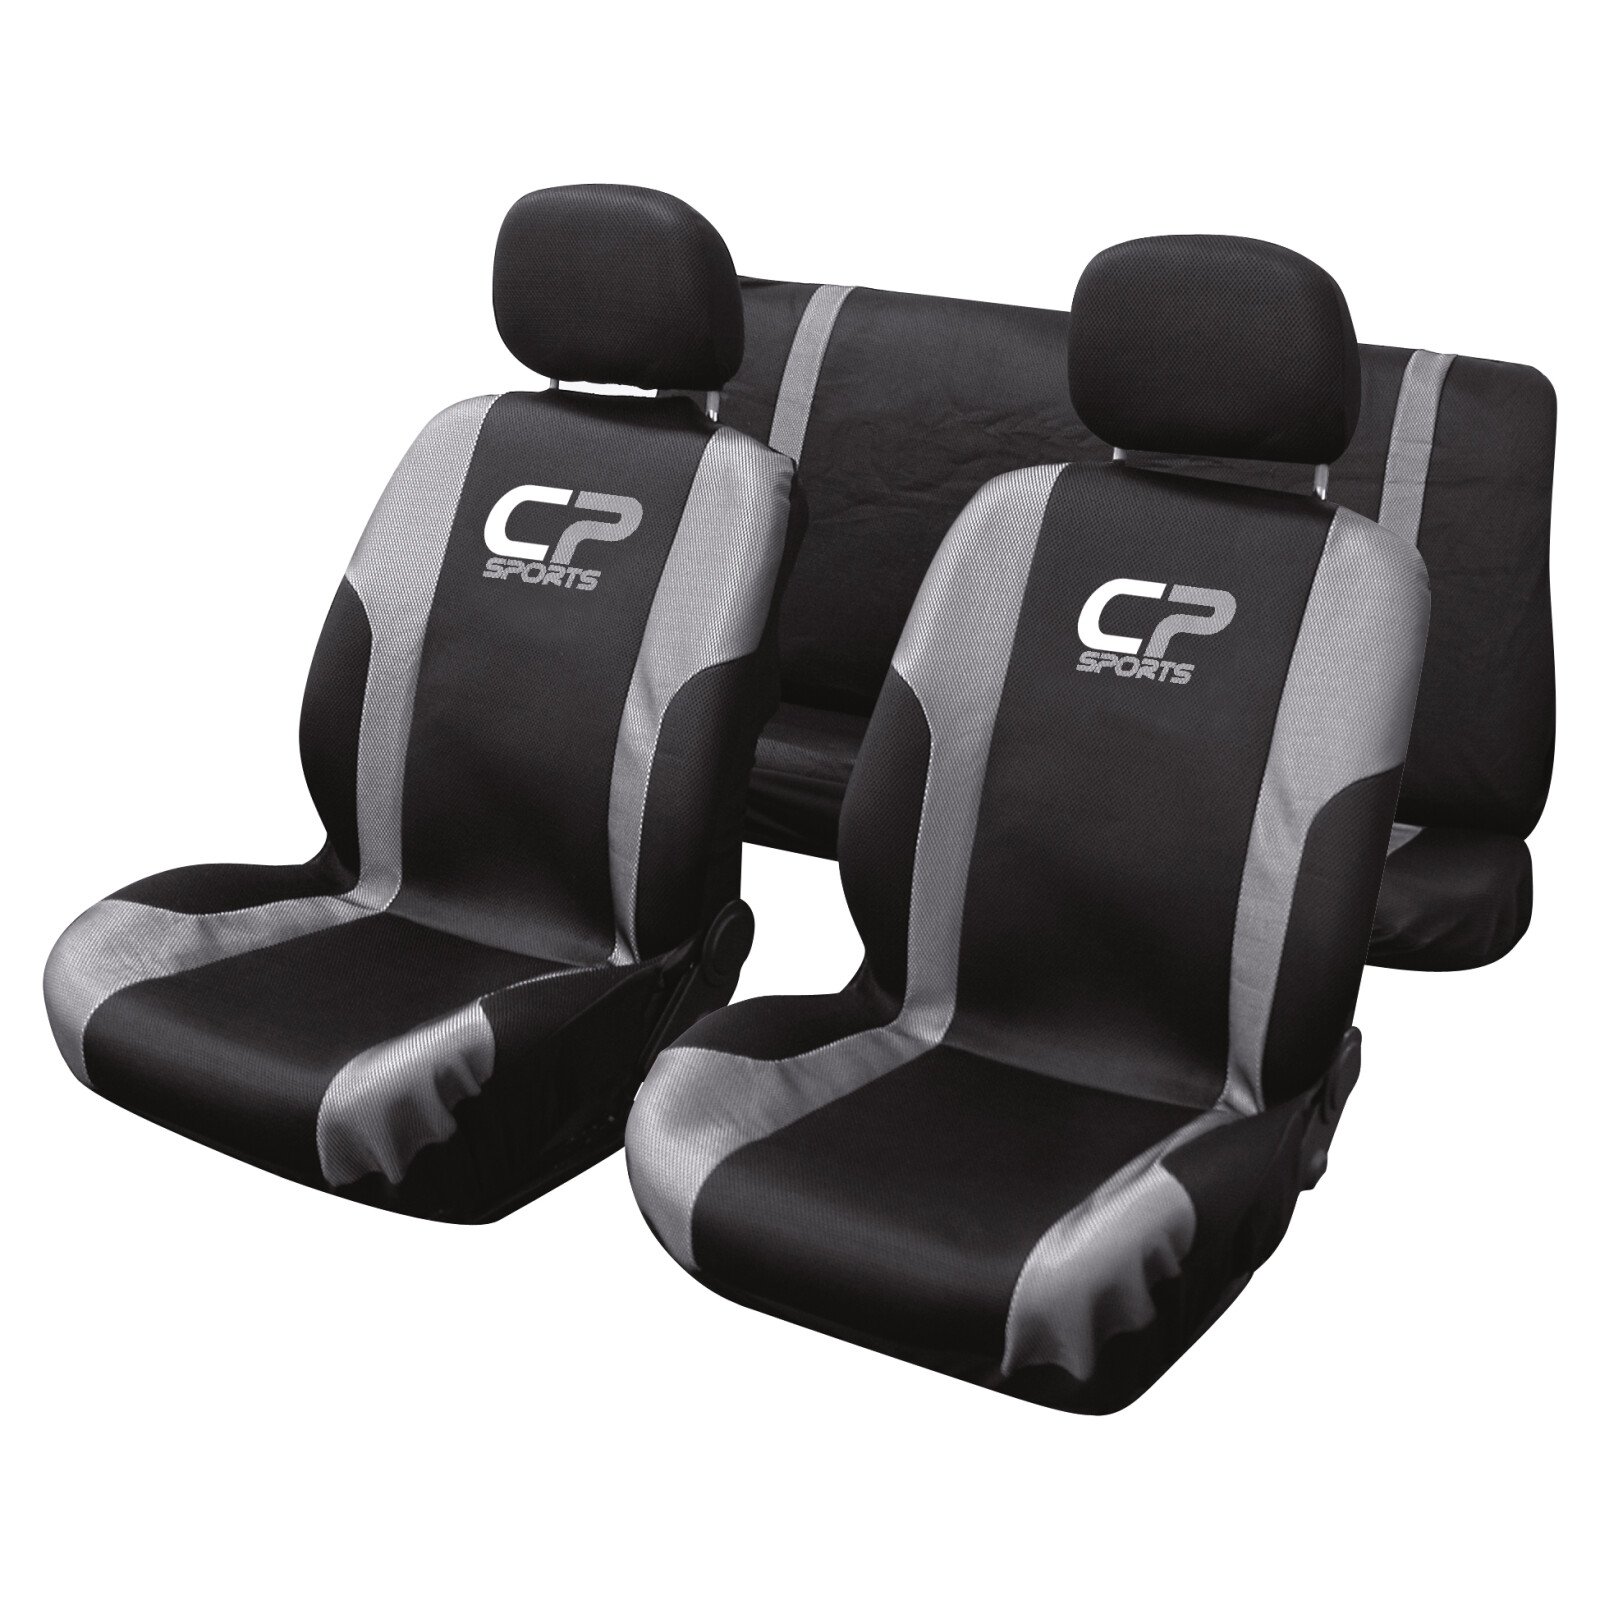 CP Sports seat covers 9pcs - Grey/Black thumb